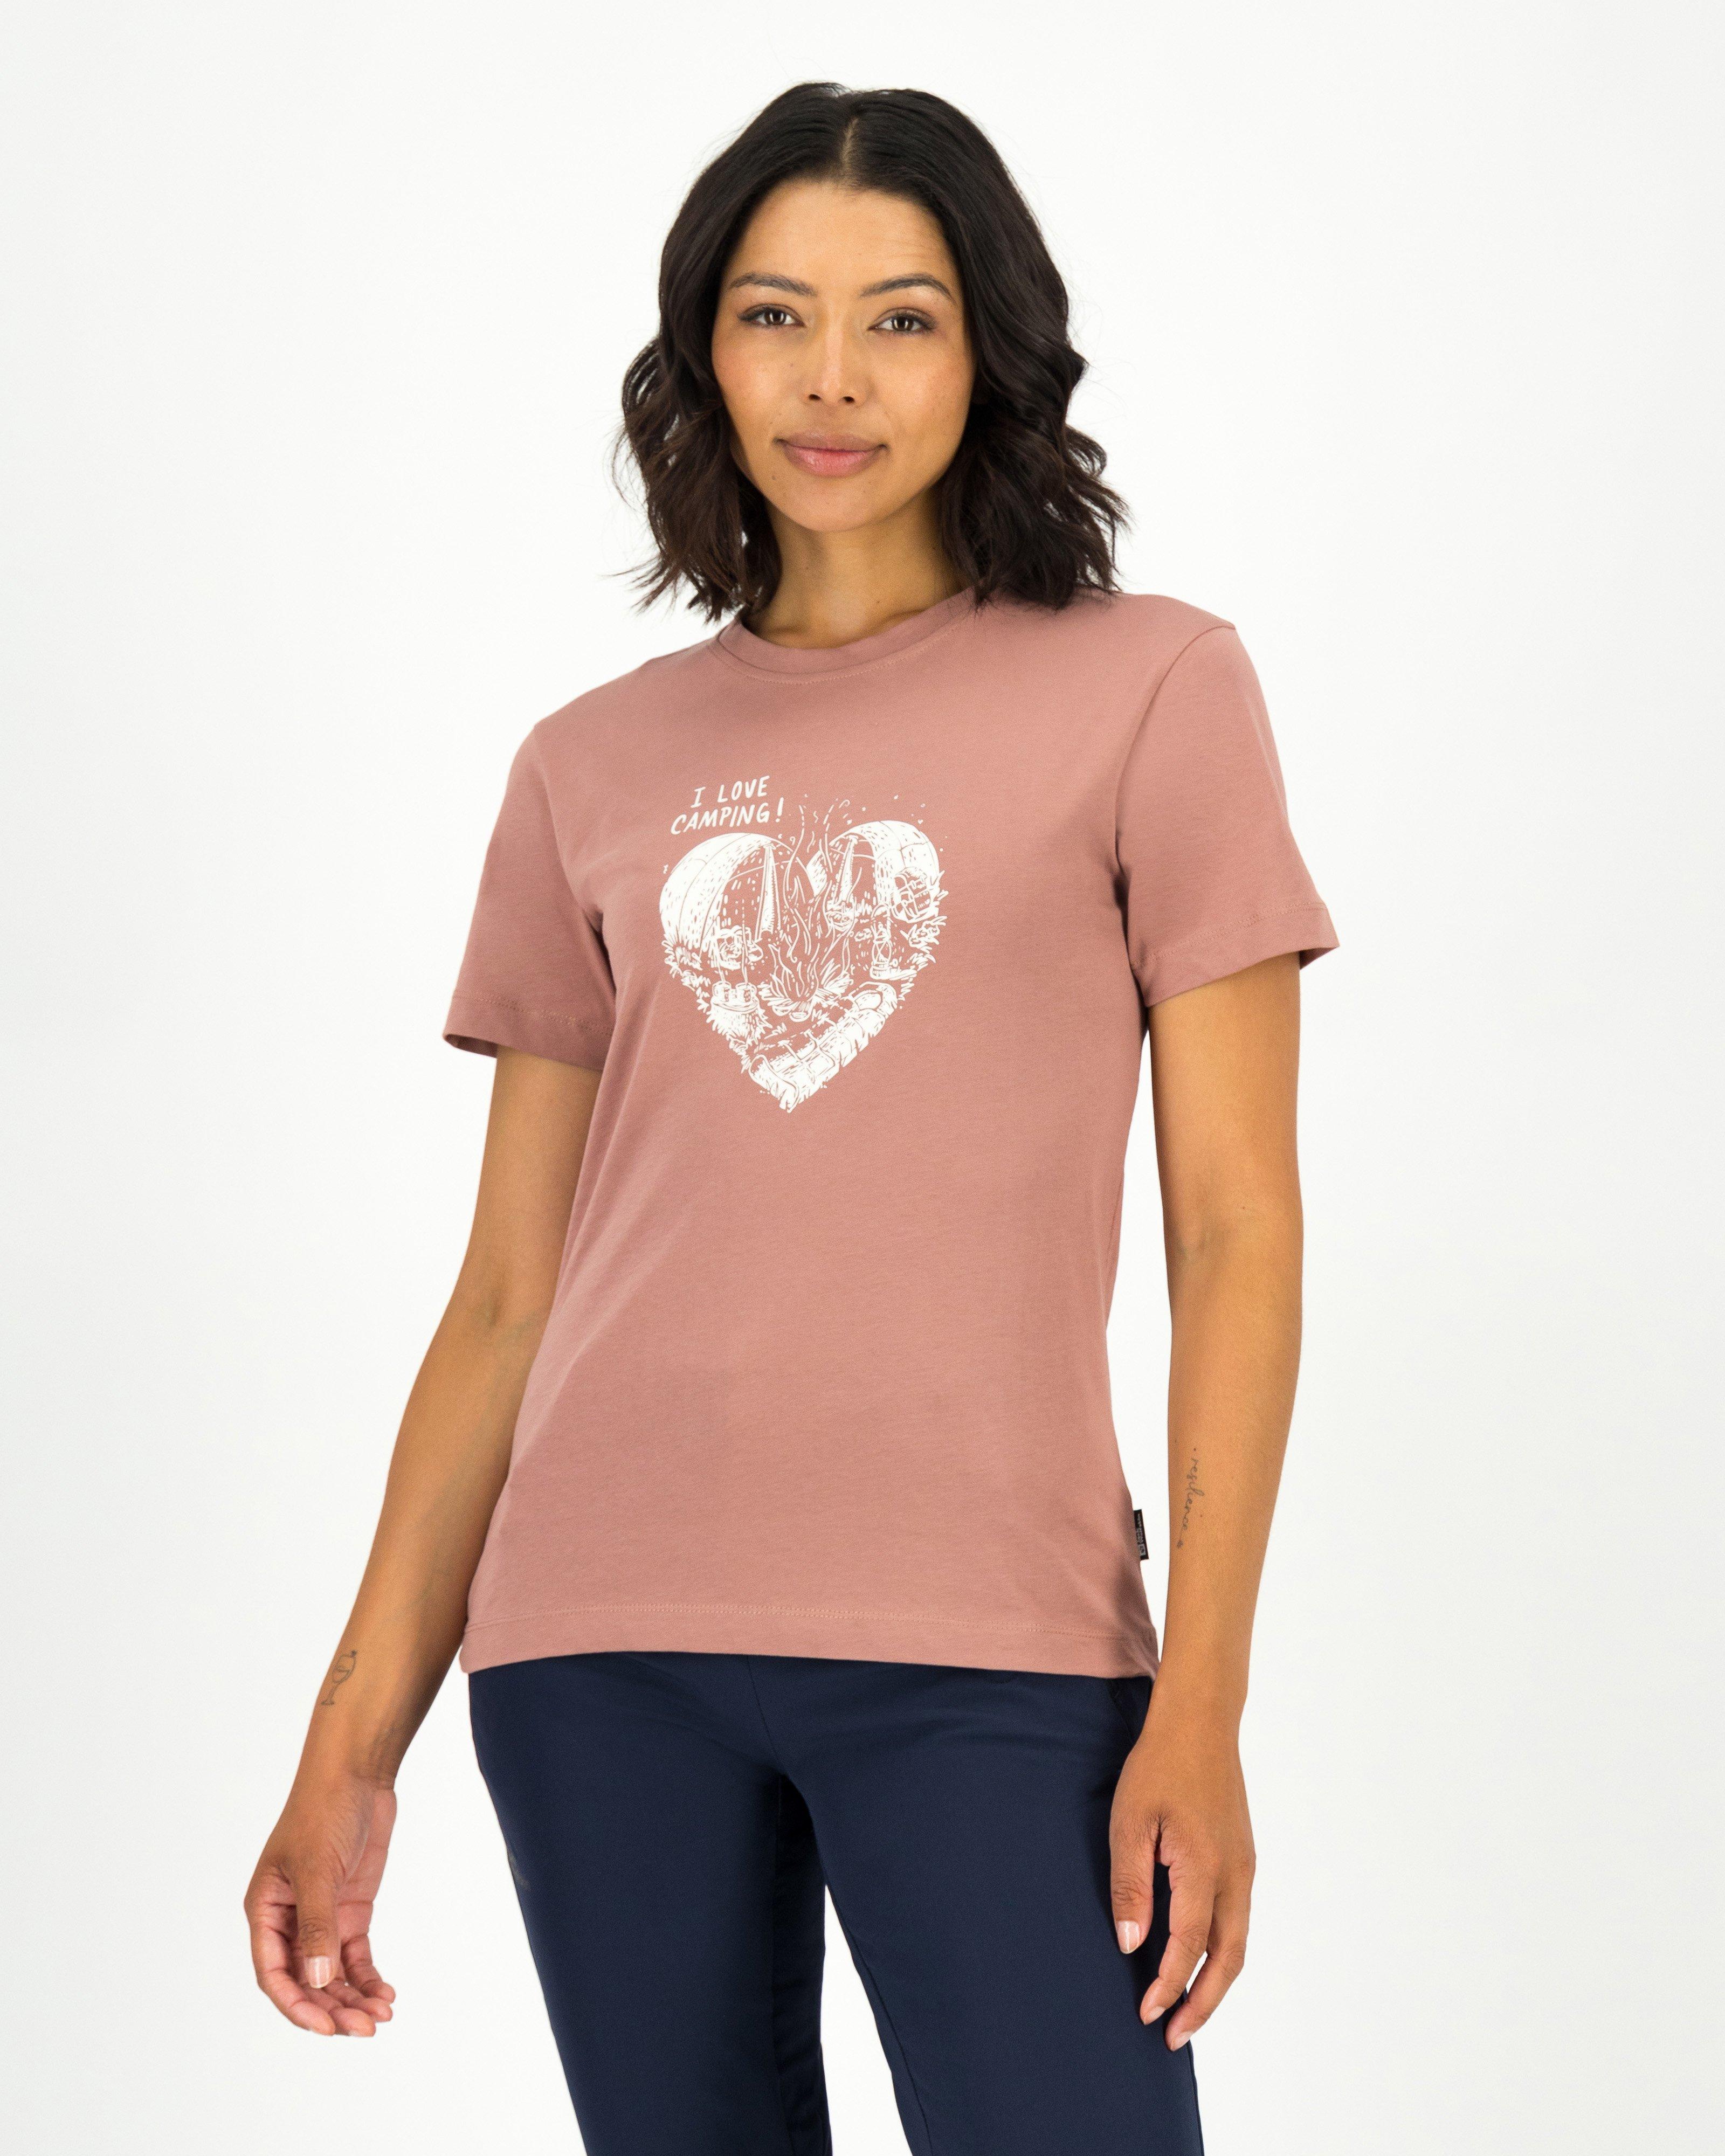 Jack Wolfskin Women’s Camping Love Slim Fit Cotton T-shirt -  Burgundy